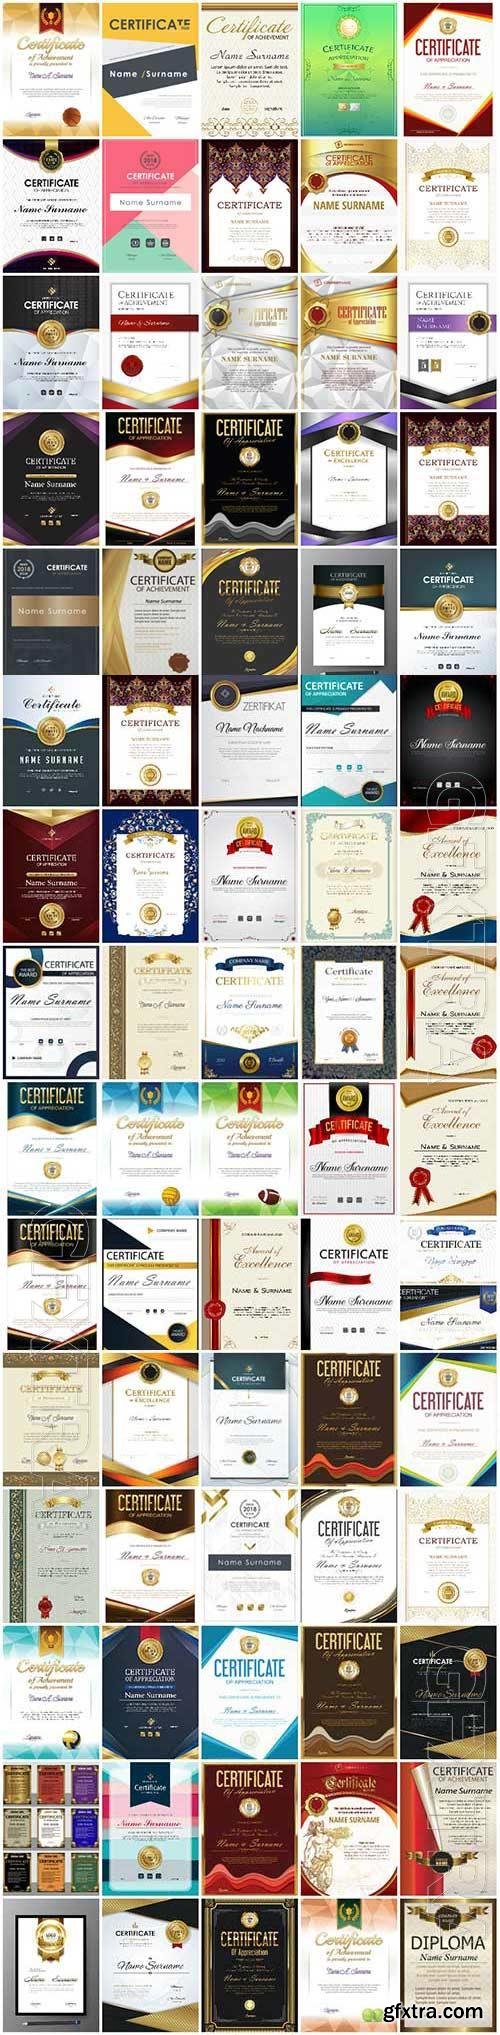 100 Bundle diplomas and certificates in vector vol 2